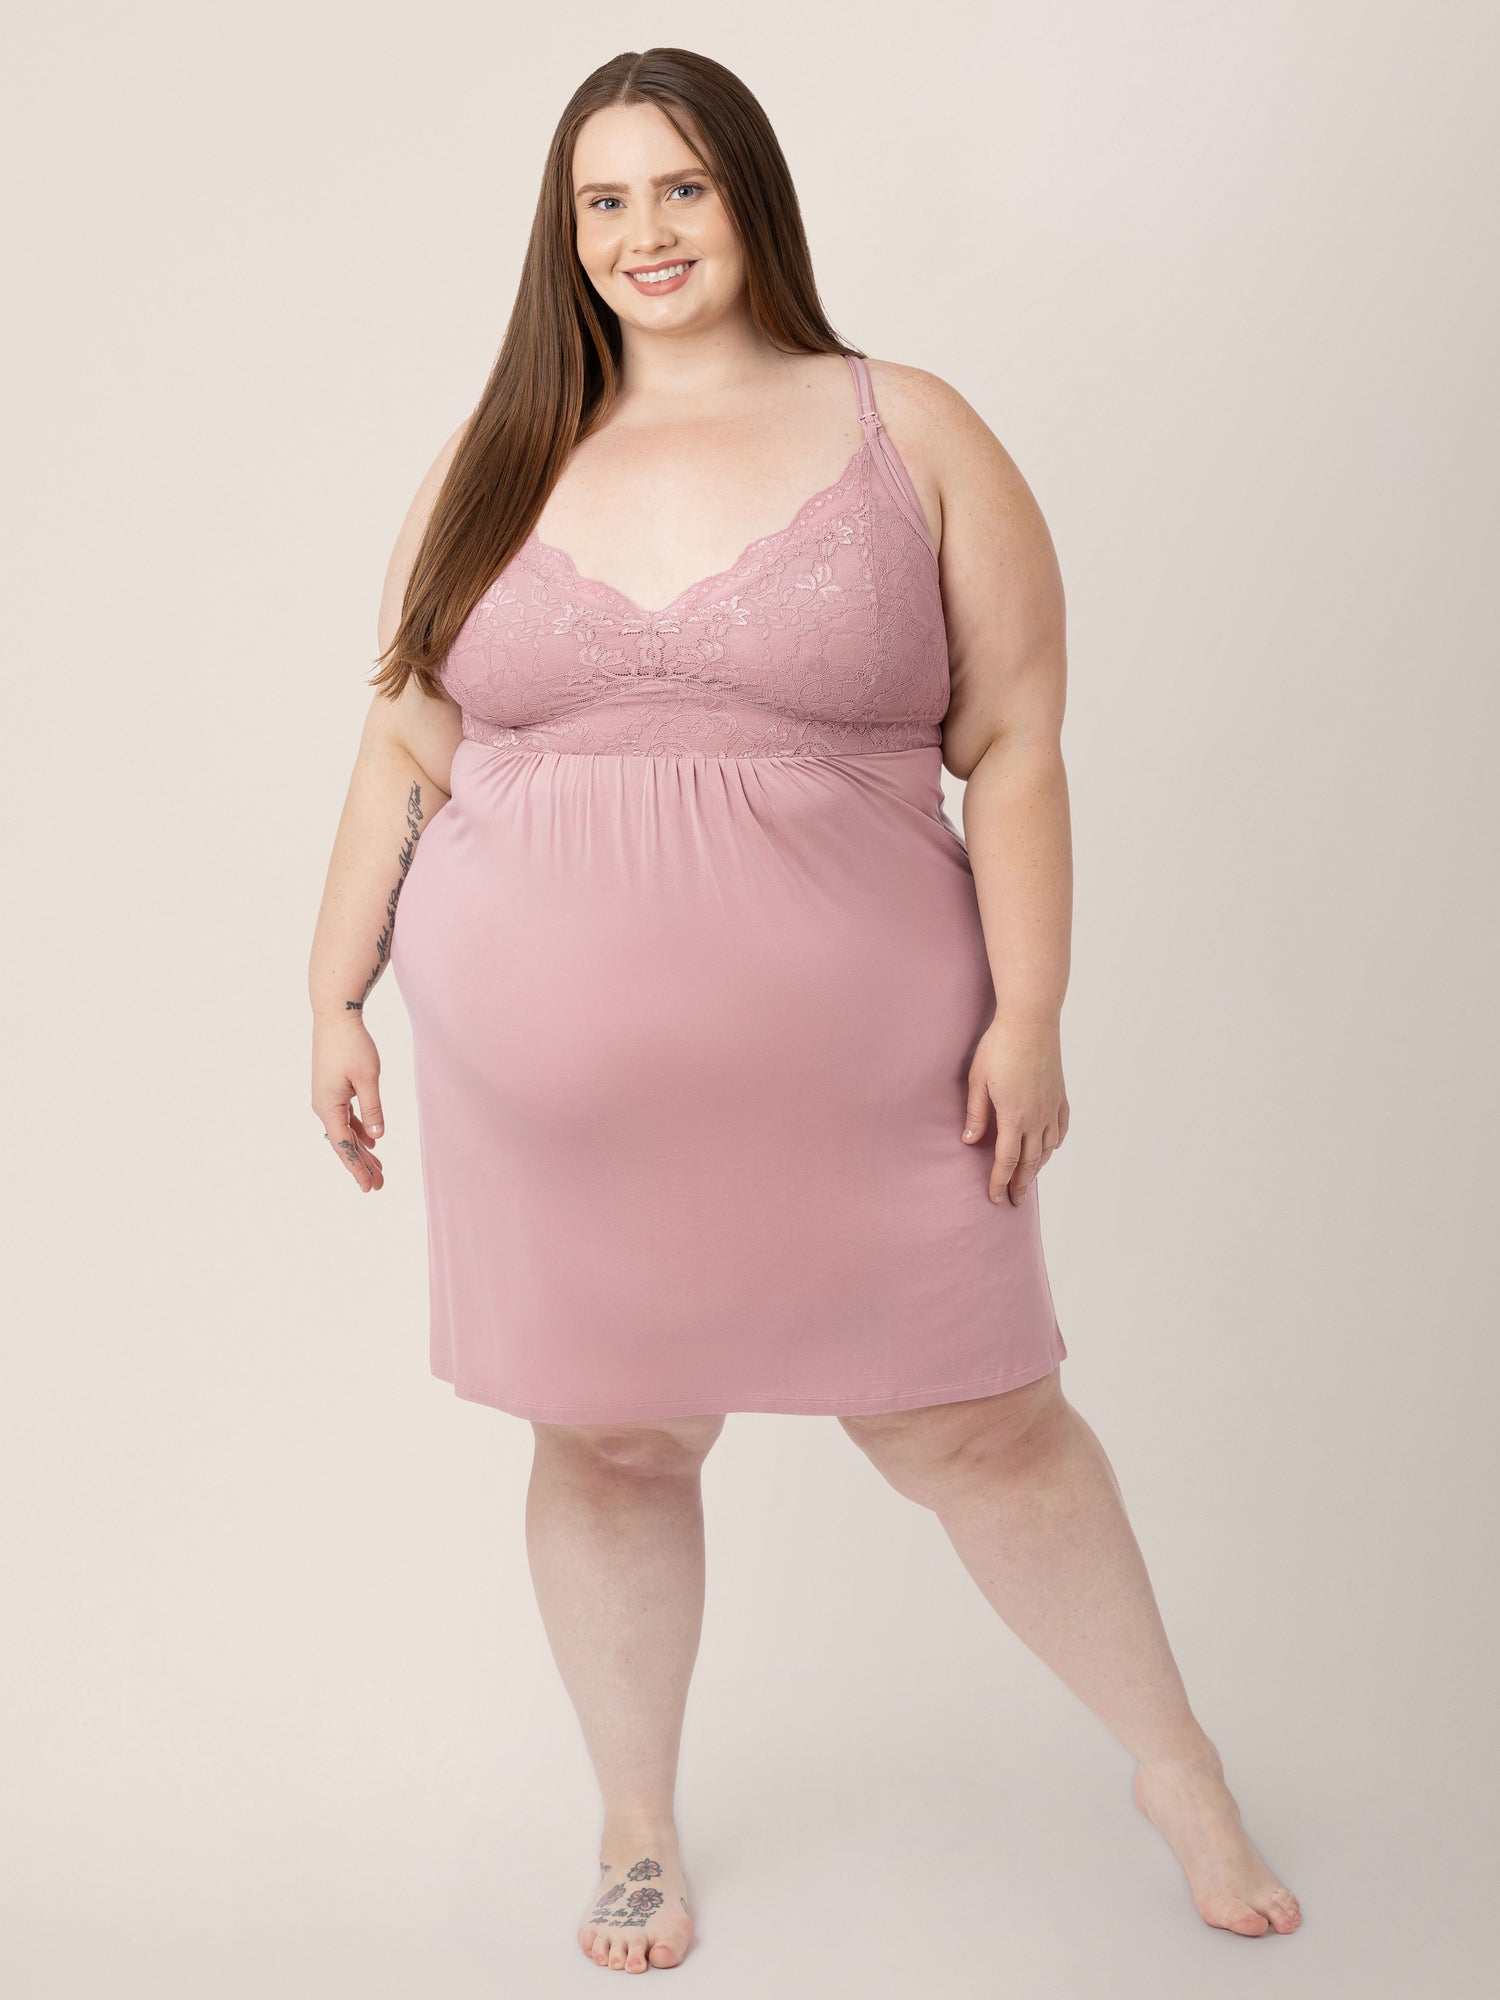 Mama Maternity Modal Slip Panties Shop Now